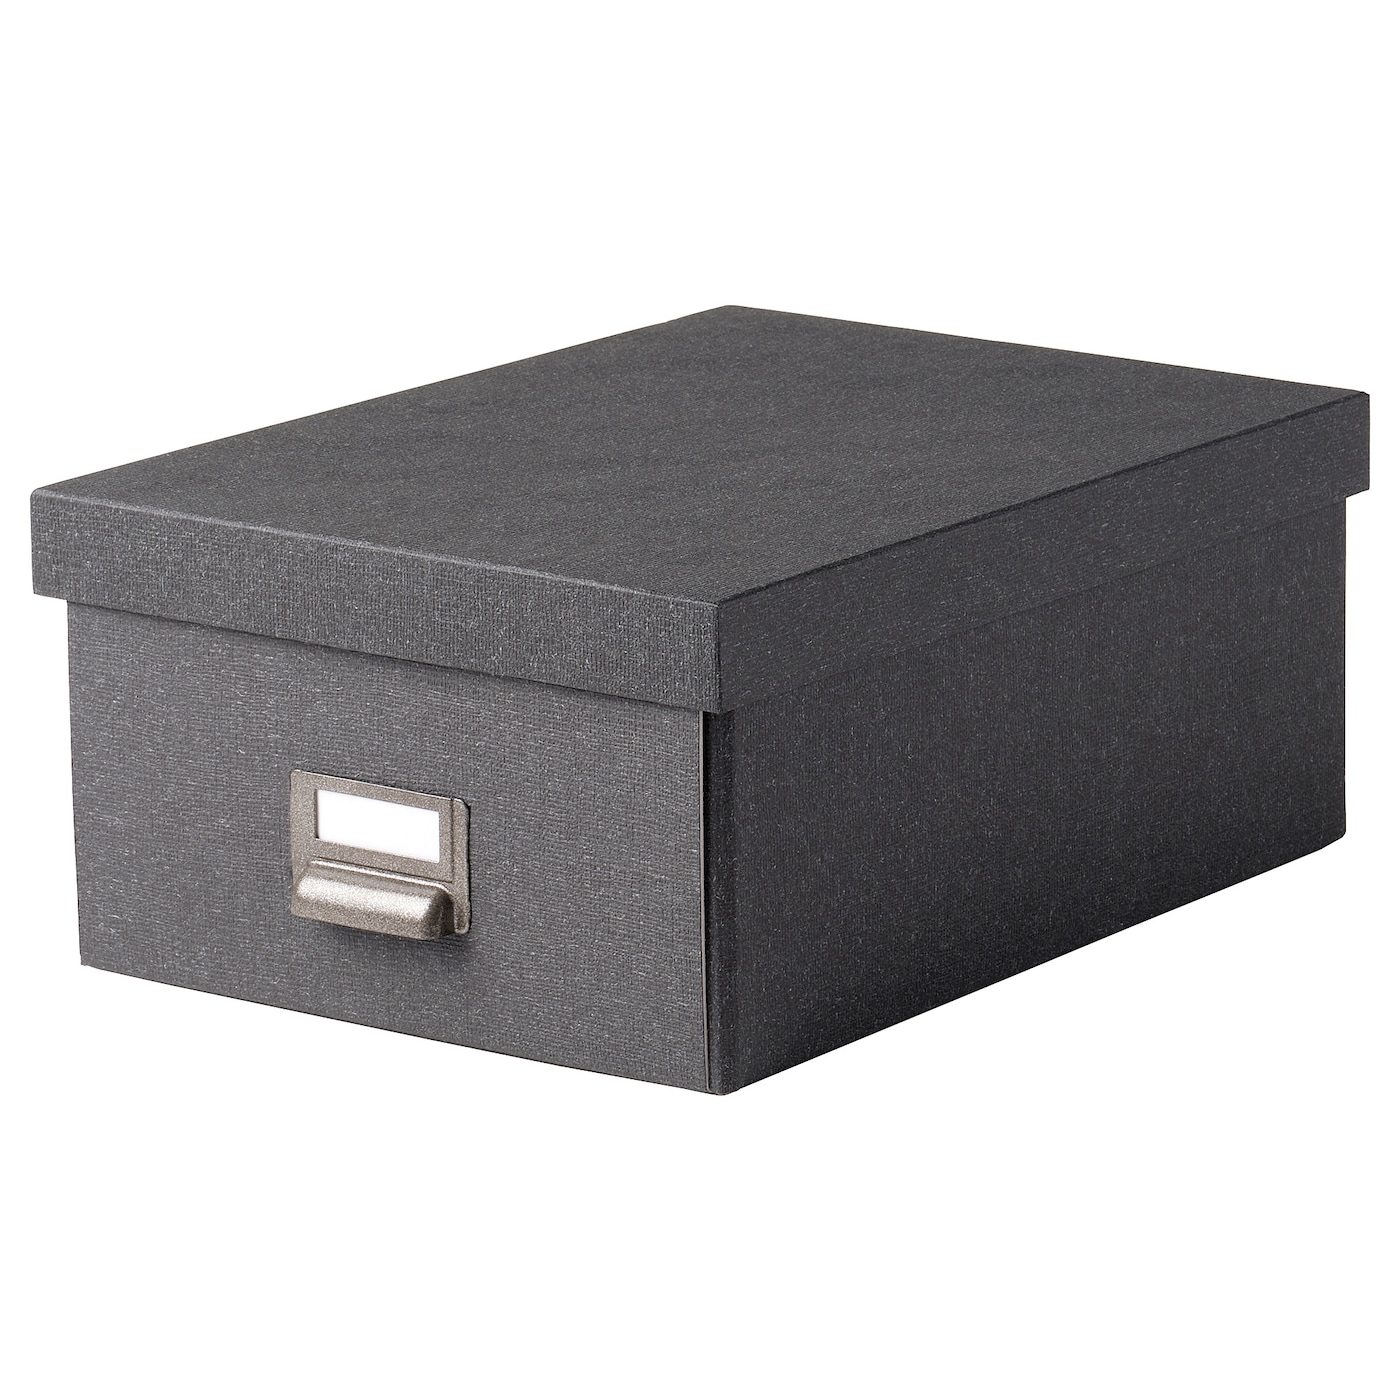 Коробка с крышкой - TJOG IKEA/ЧУГ ИКЕА, 36х25х15 см,  черный